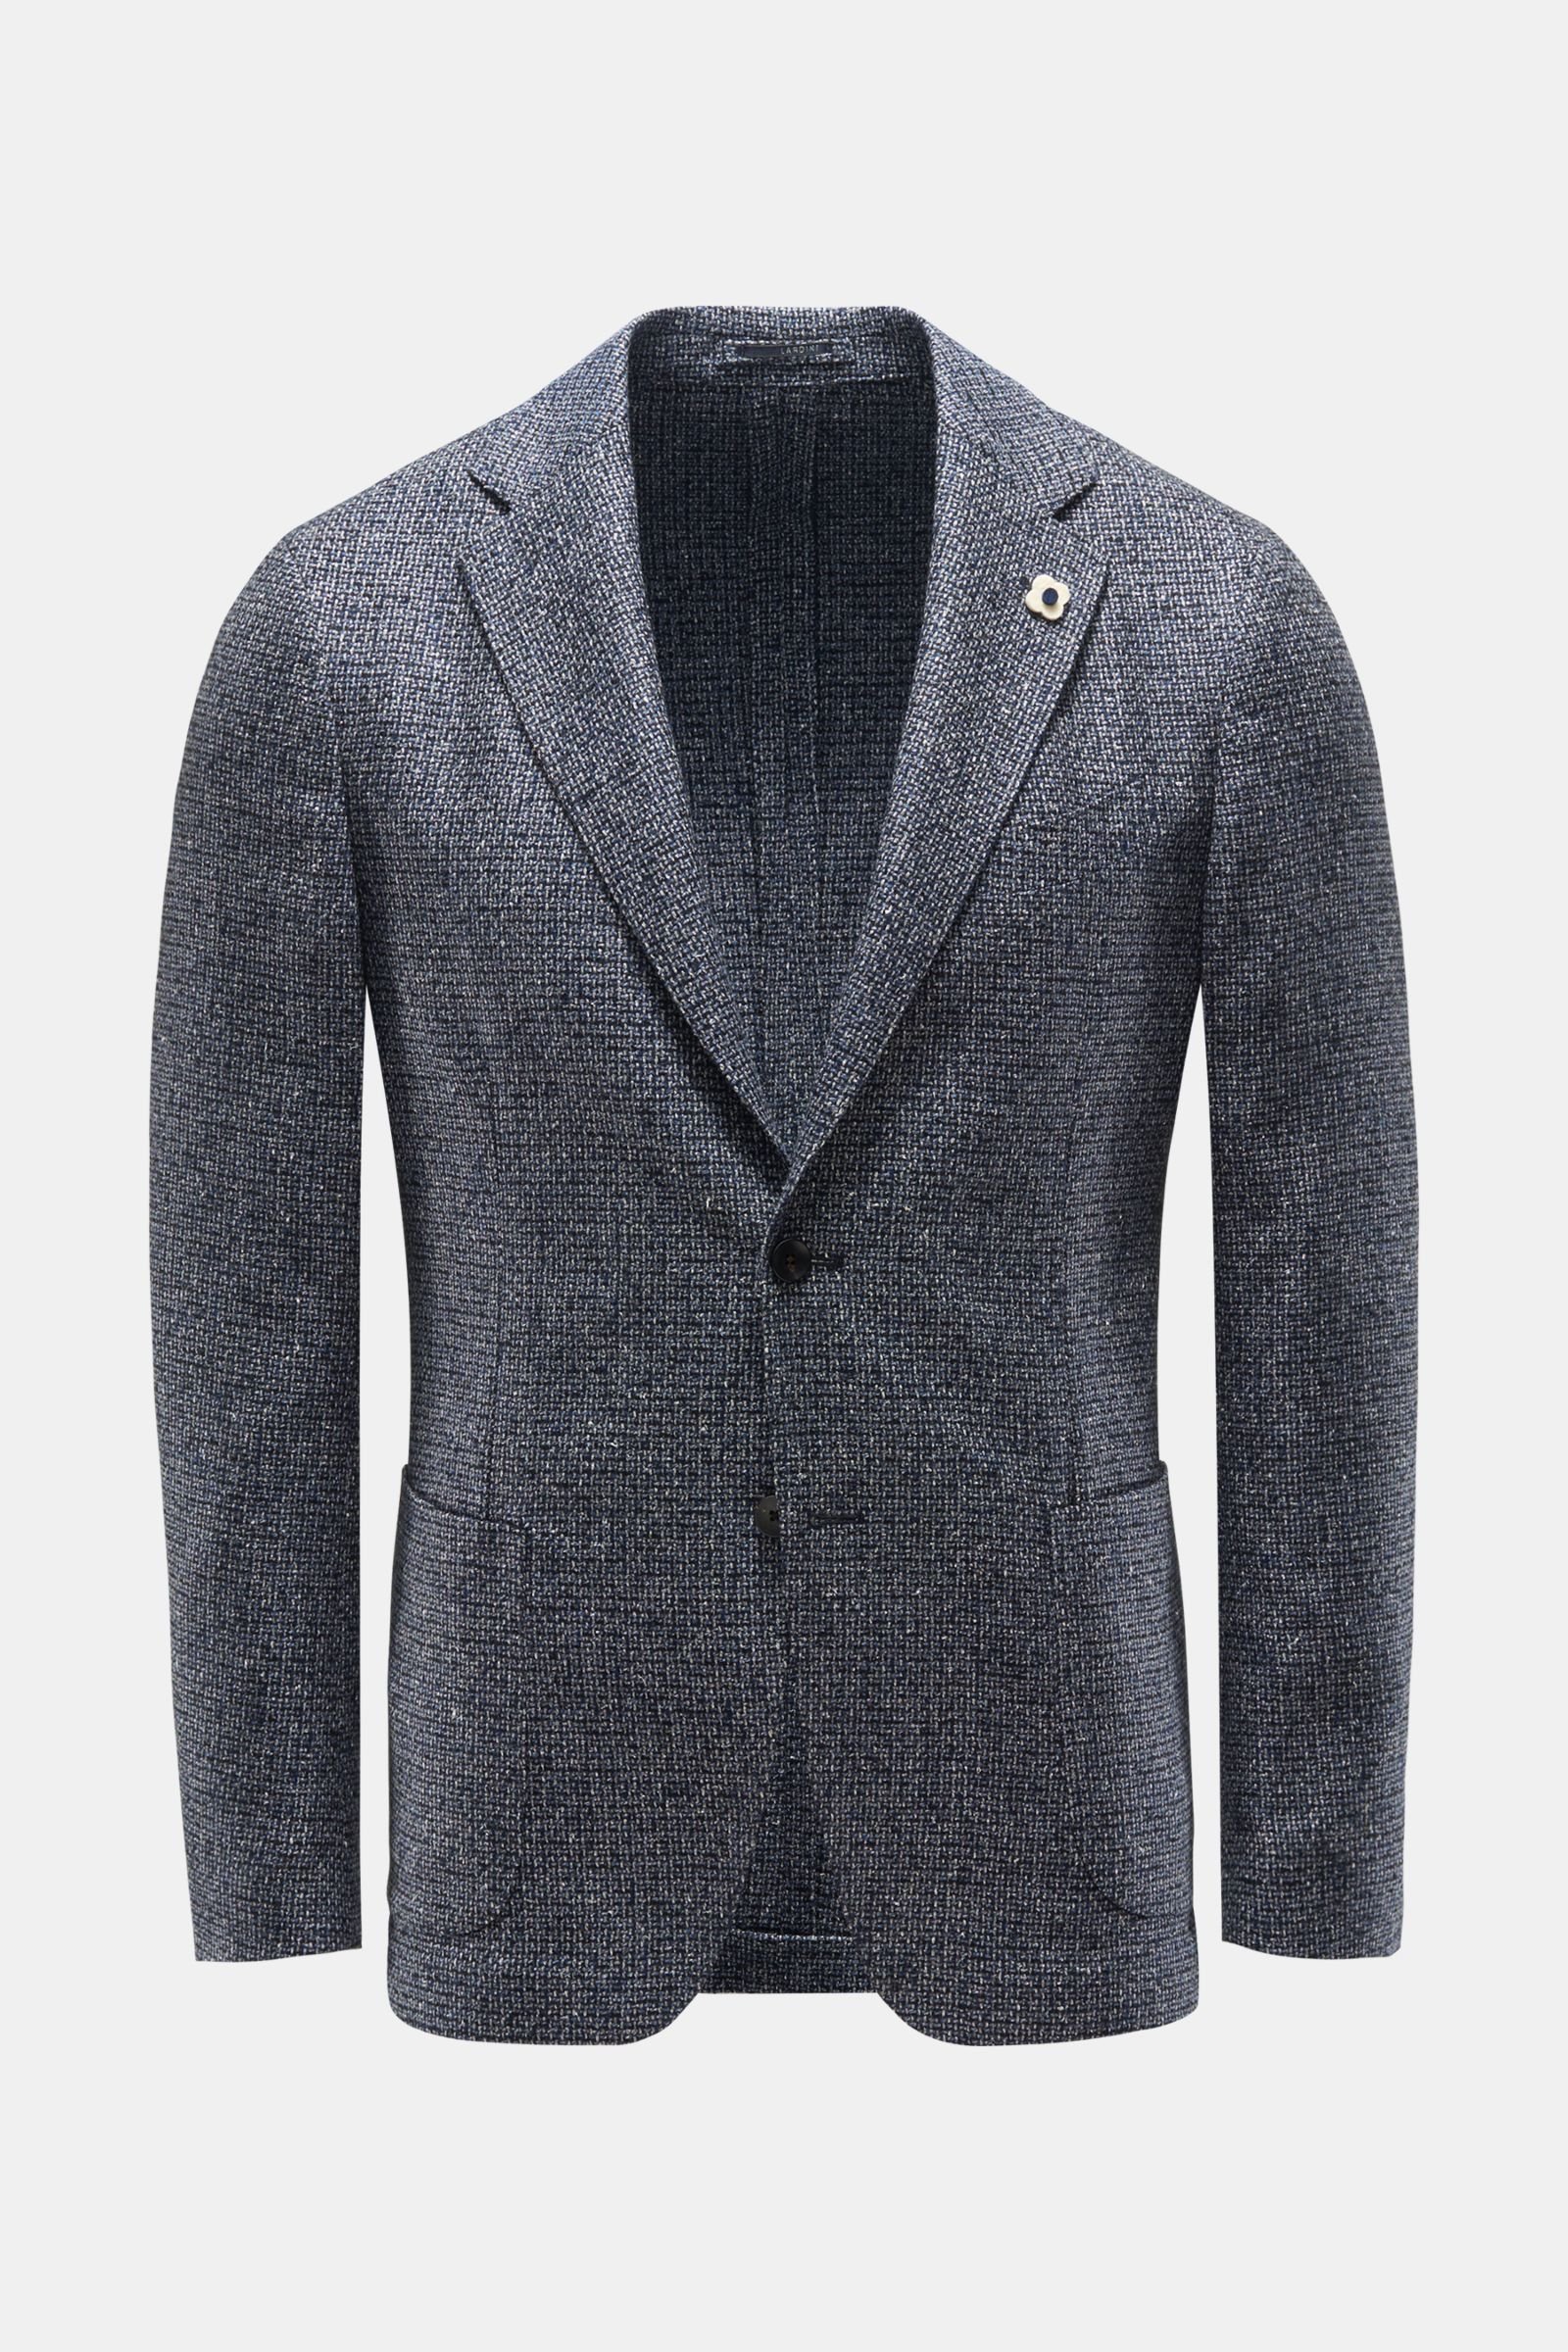 Smart-casual jacket navy/grey